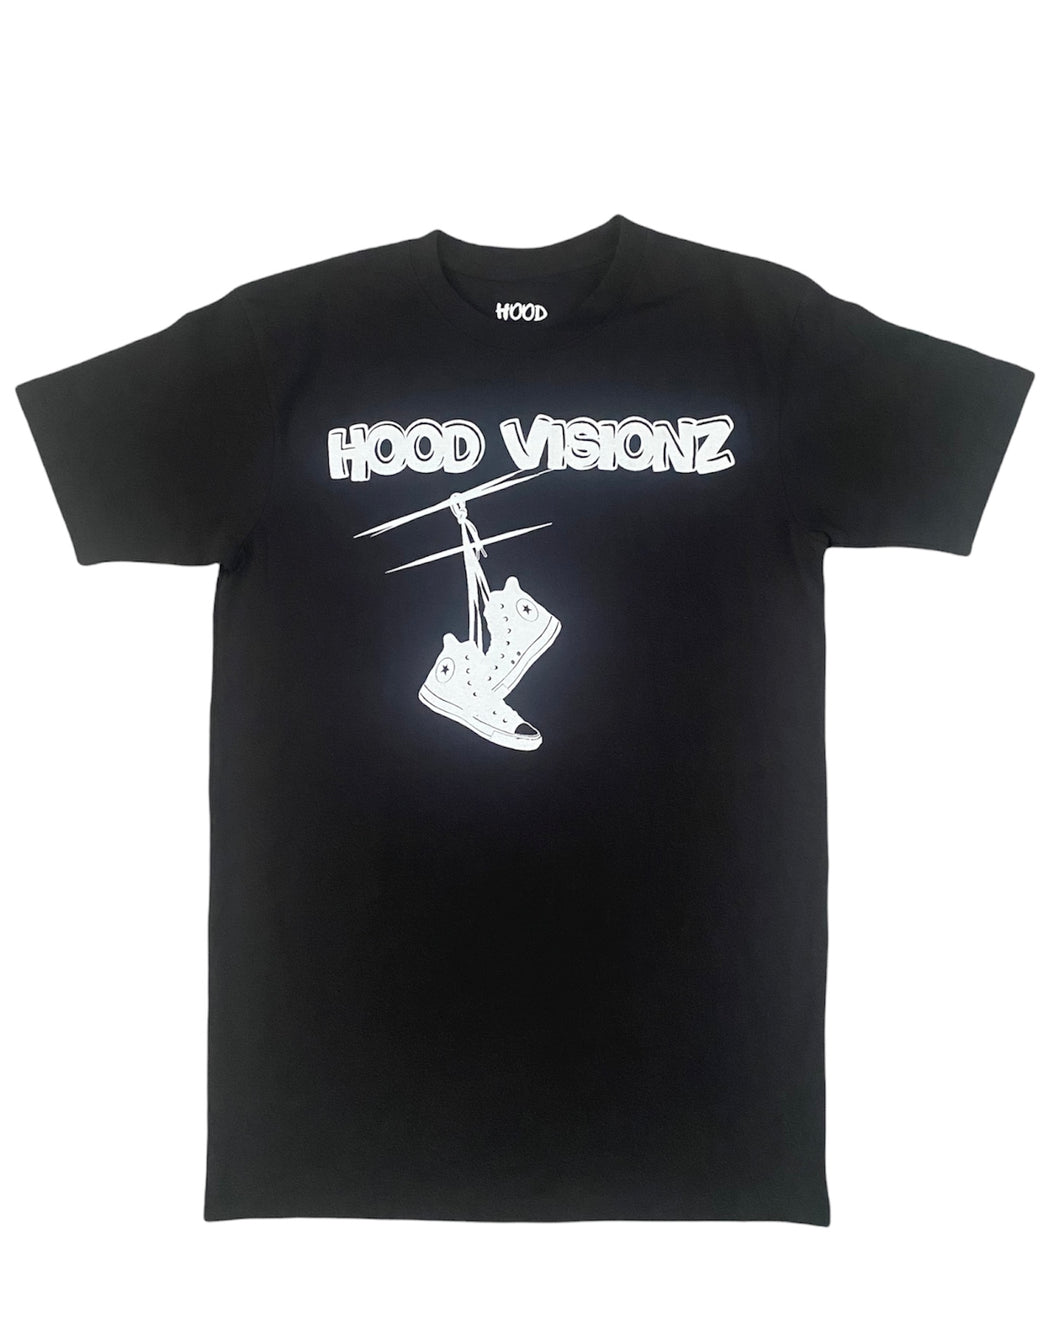 Hood Visionz Shoe Hanging Tees